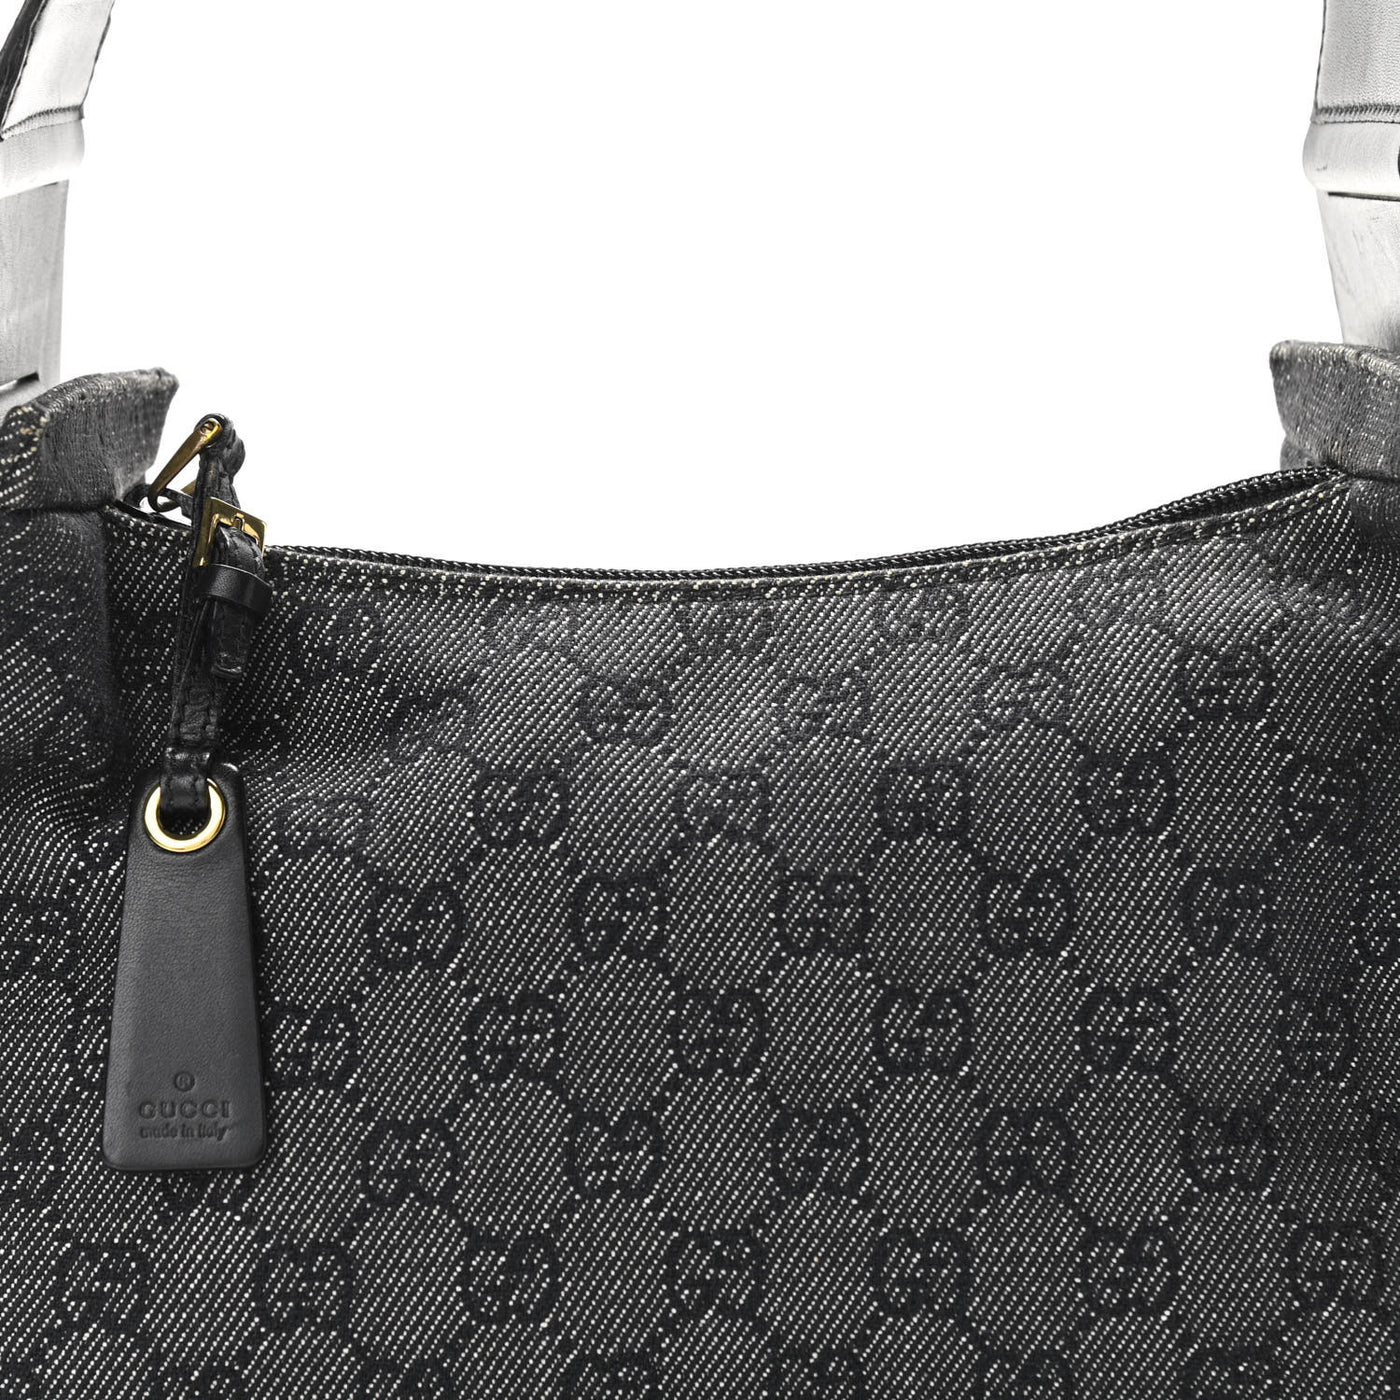 Gucci Denim Monogram GG Signature Shoulder Bag